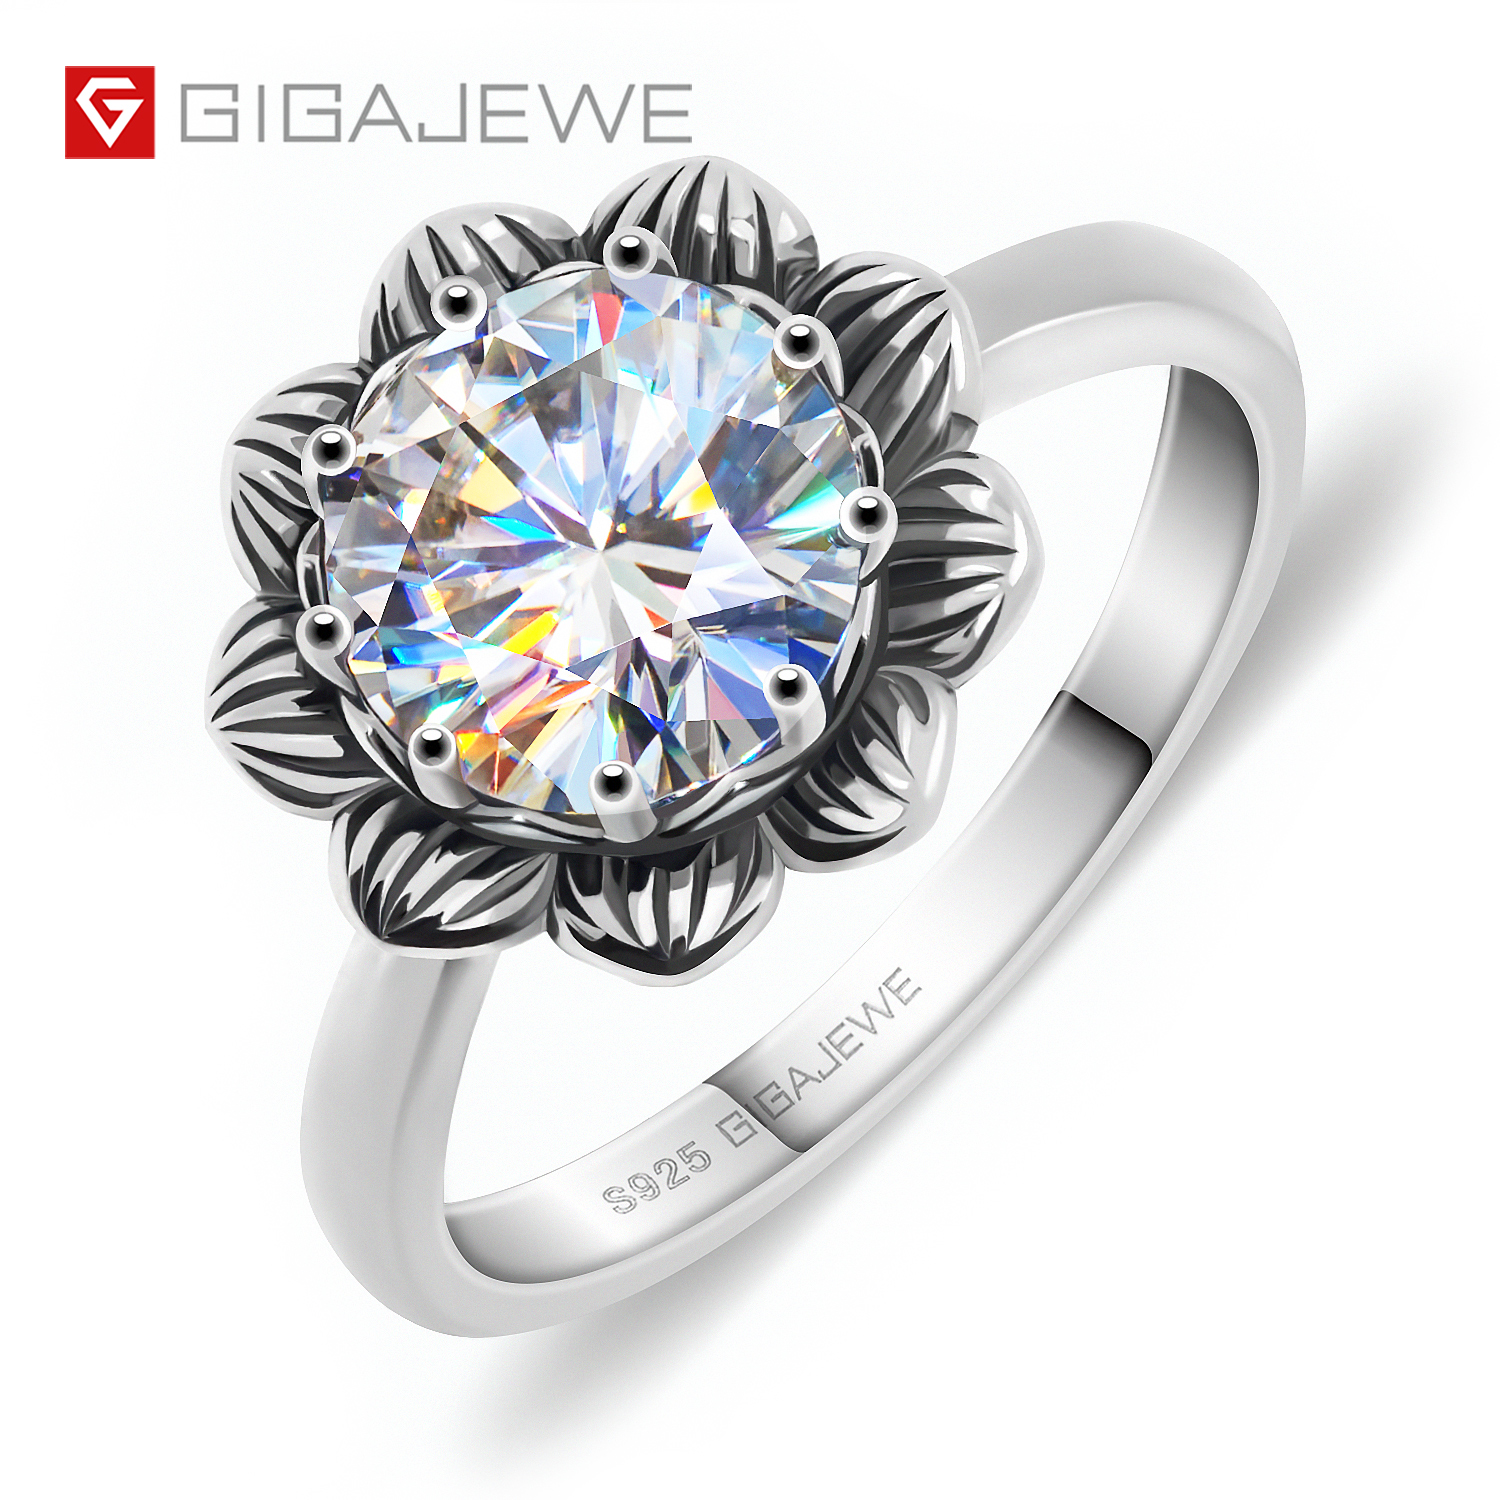 GIGAJEWE 2.0 克拉 8.0 毫米 EF 圆形切割 VVS1 925 泰国银莫桑石戒指钻石测试通过珠宝爱情信物女士女孩礼物